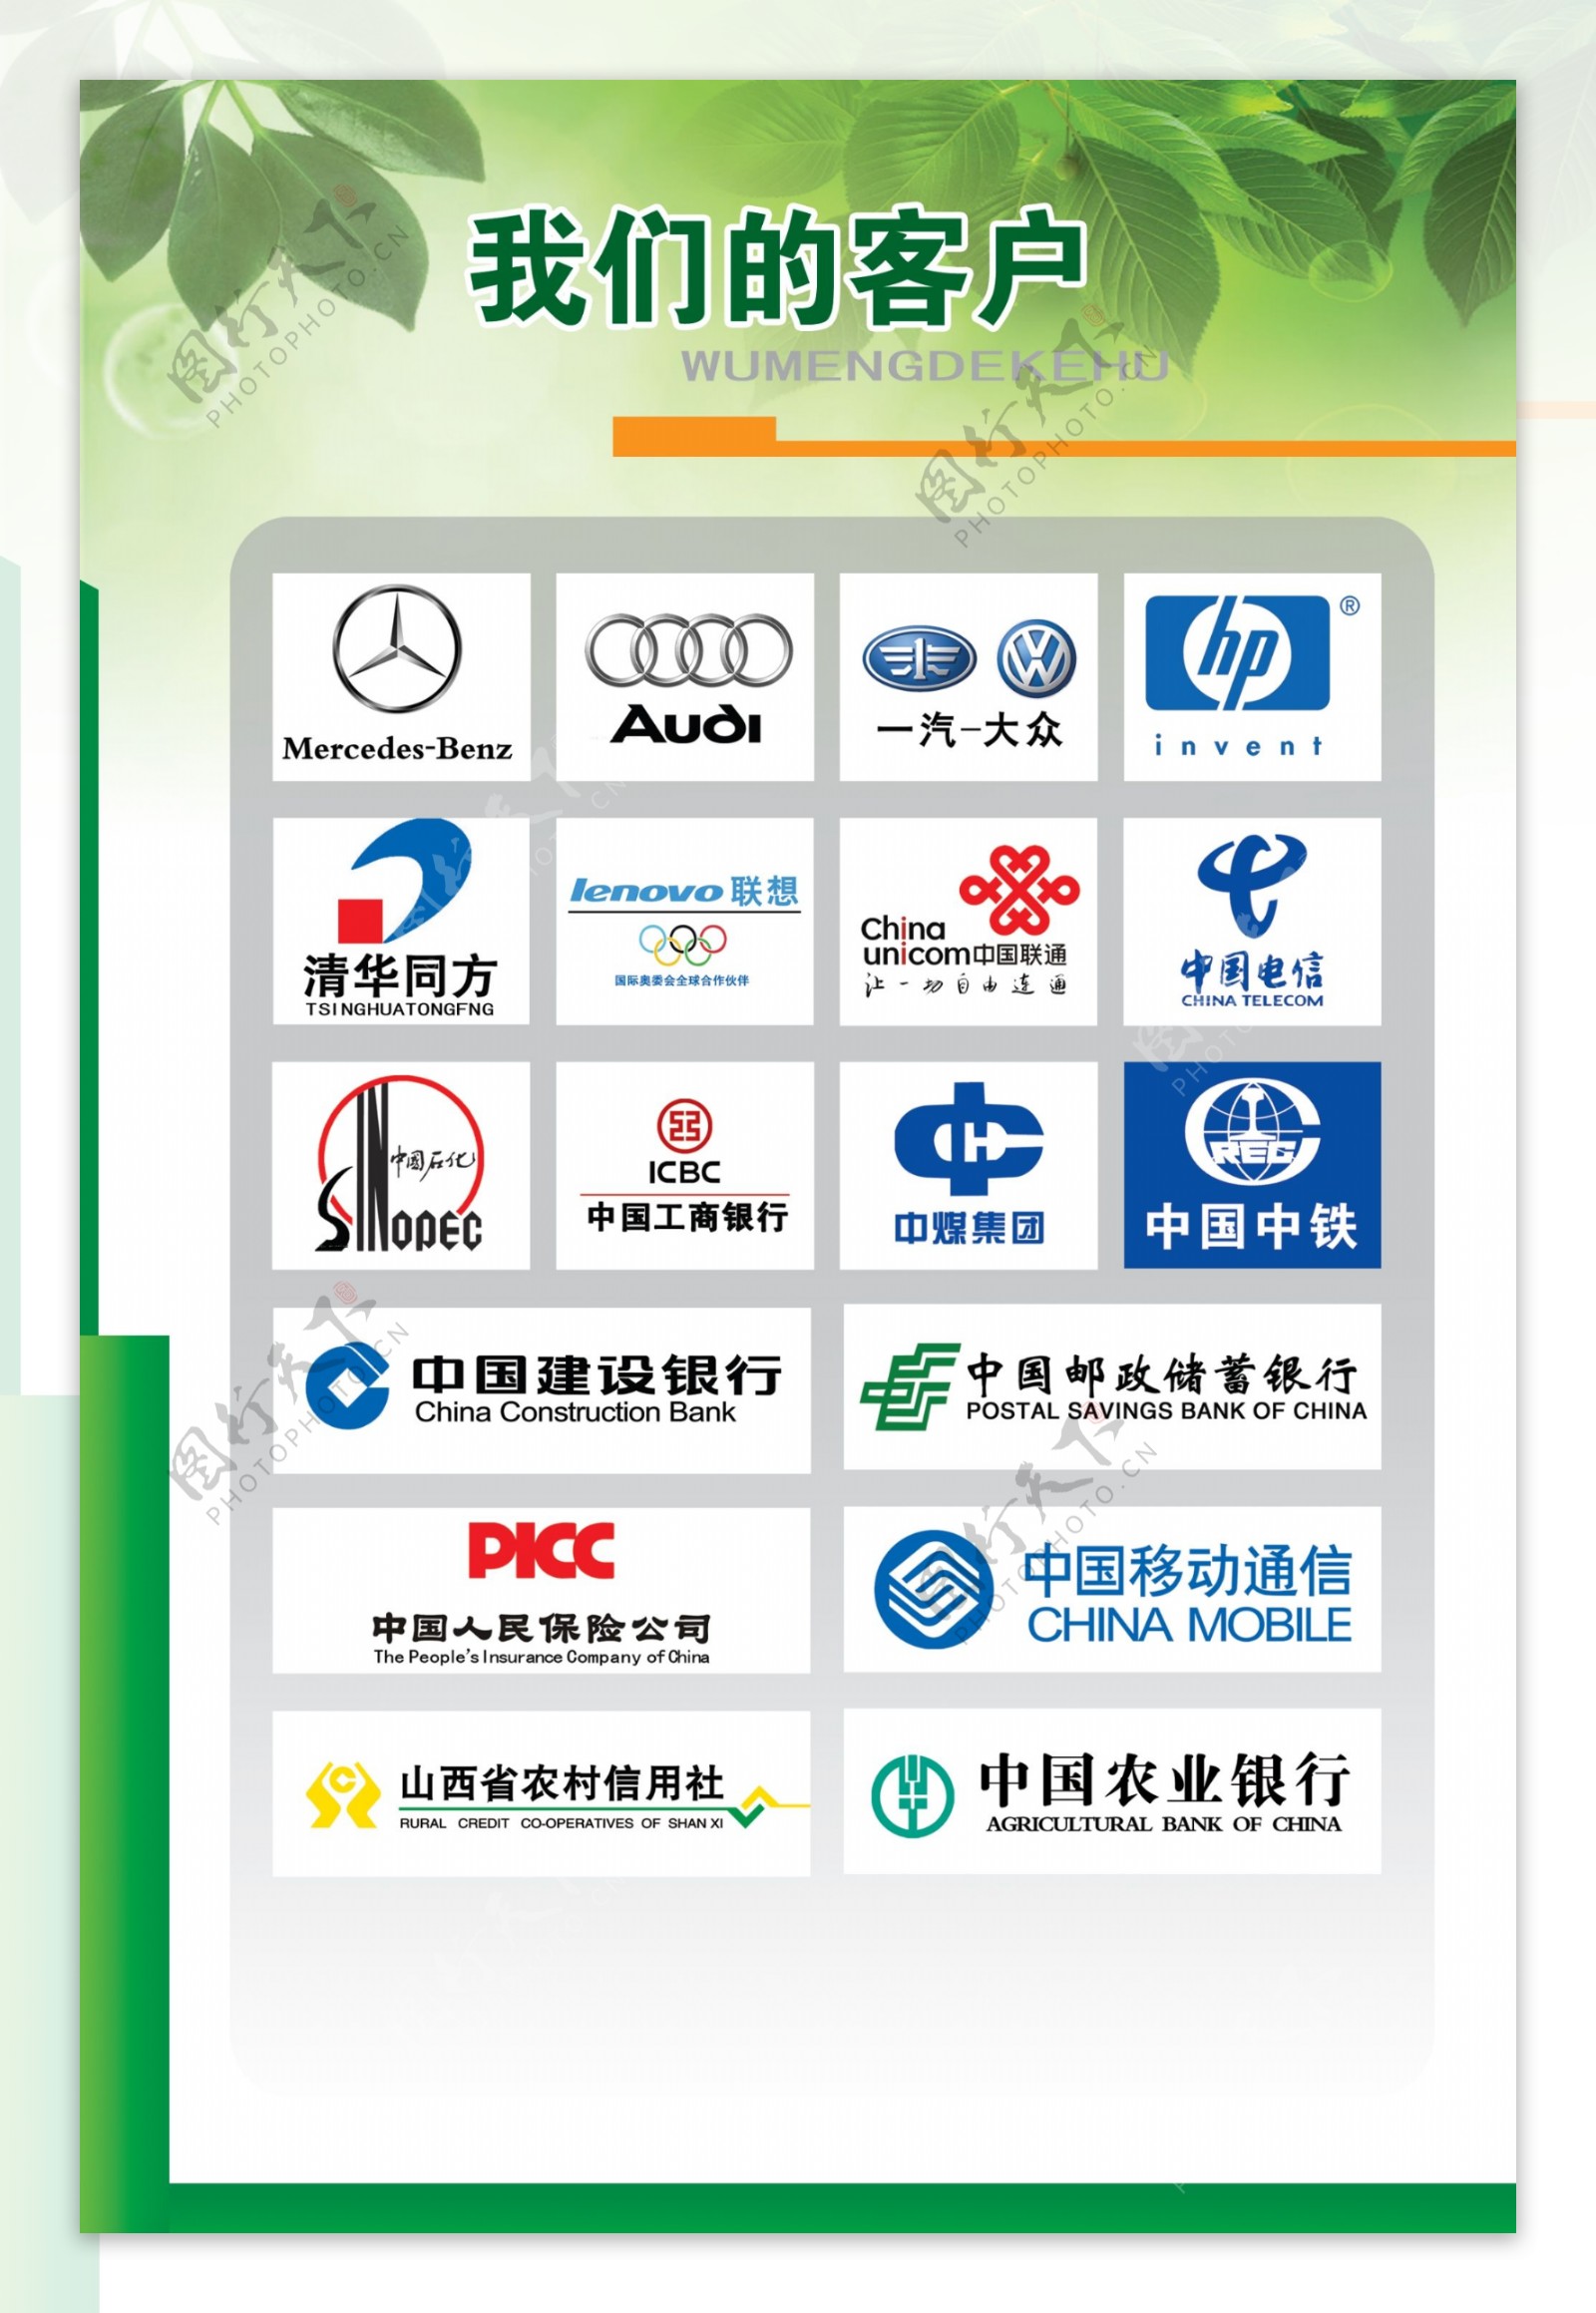 logo中国移动建设银行农业银行电信联通